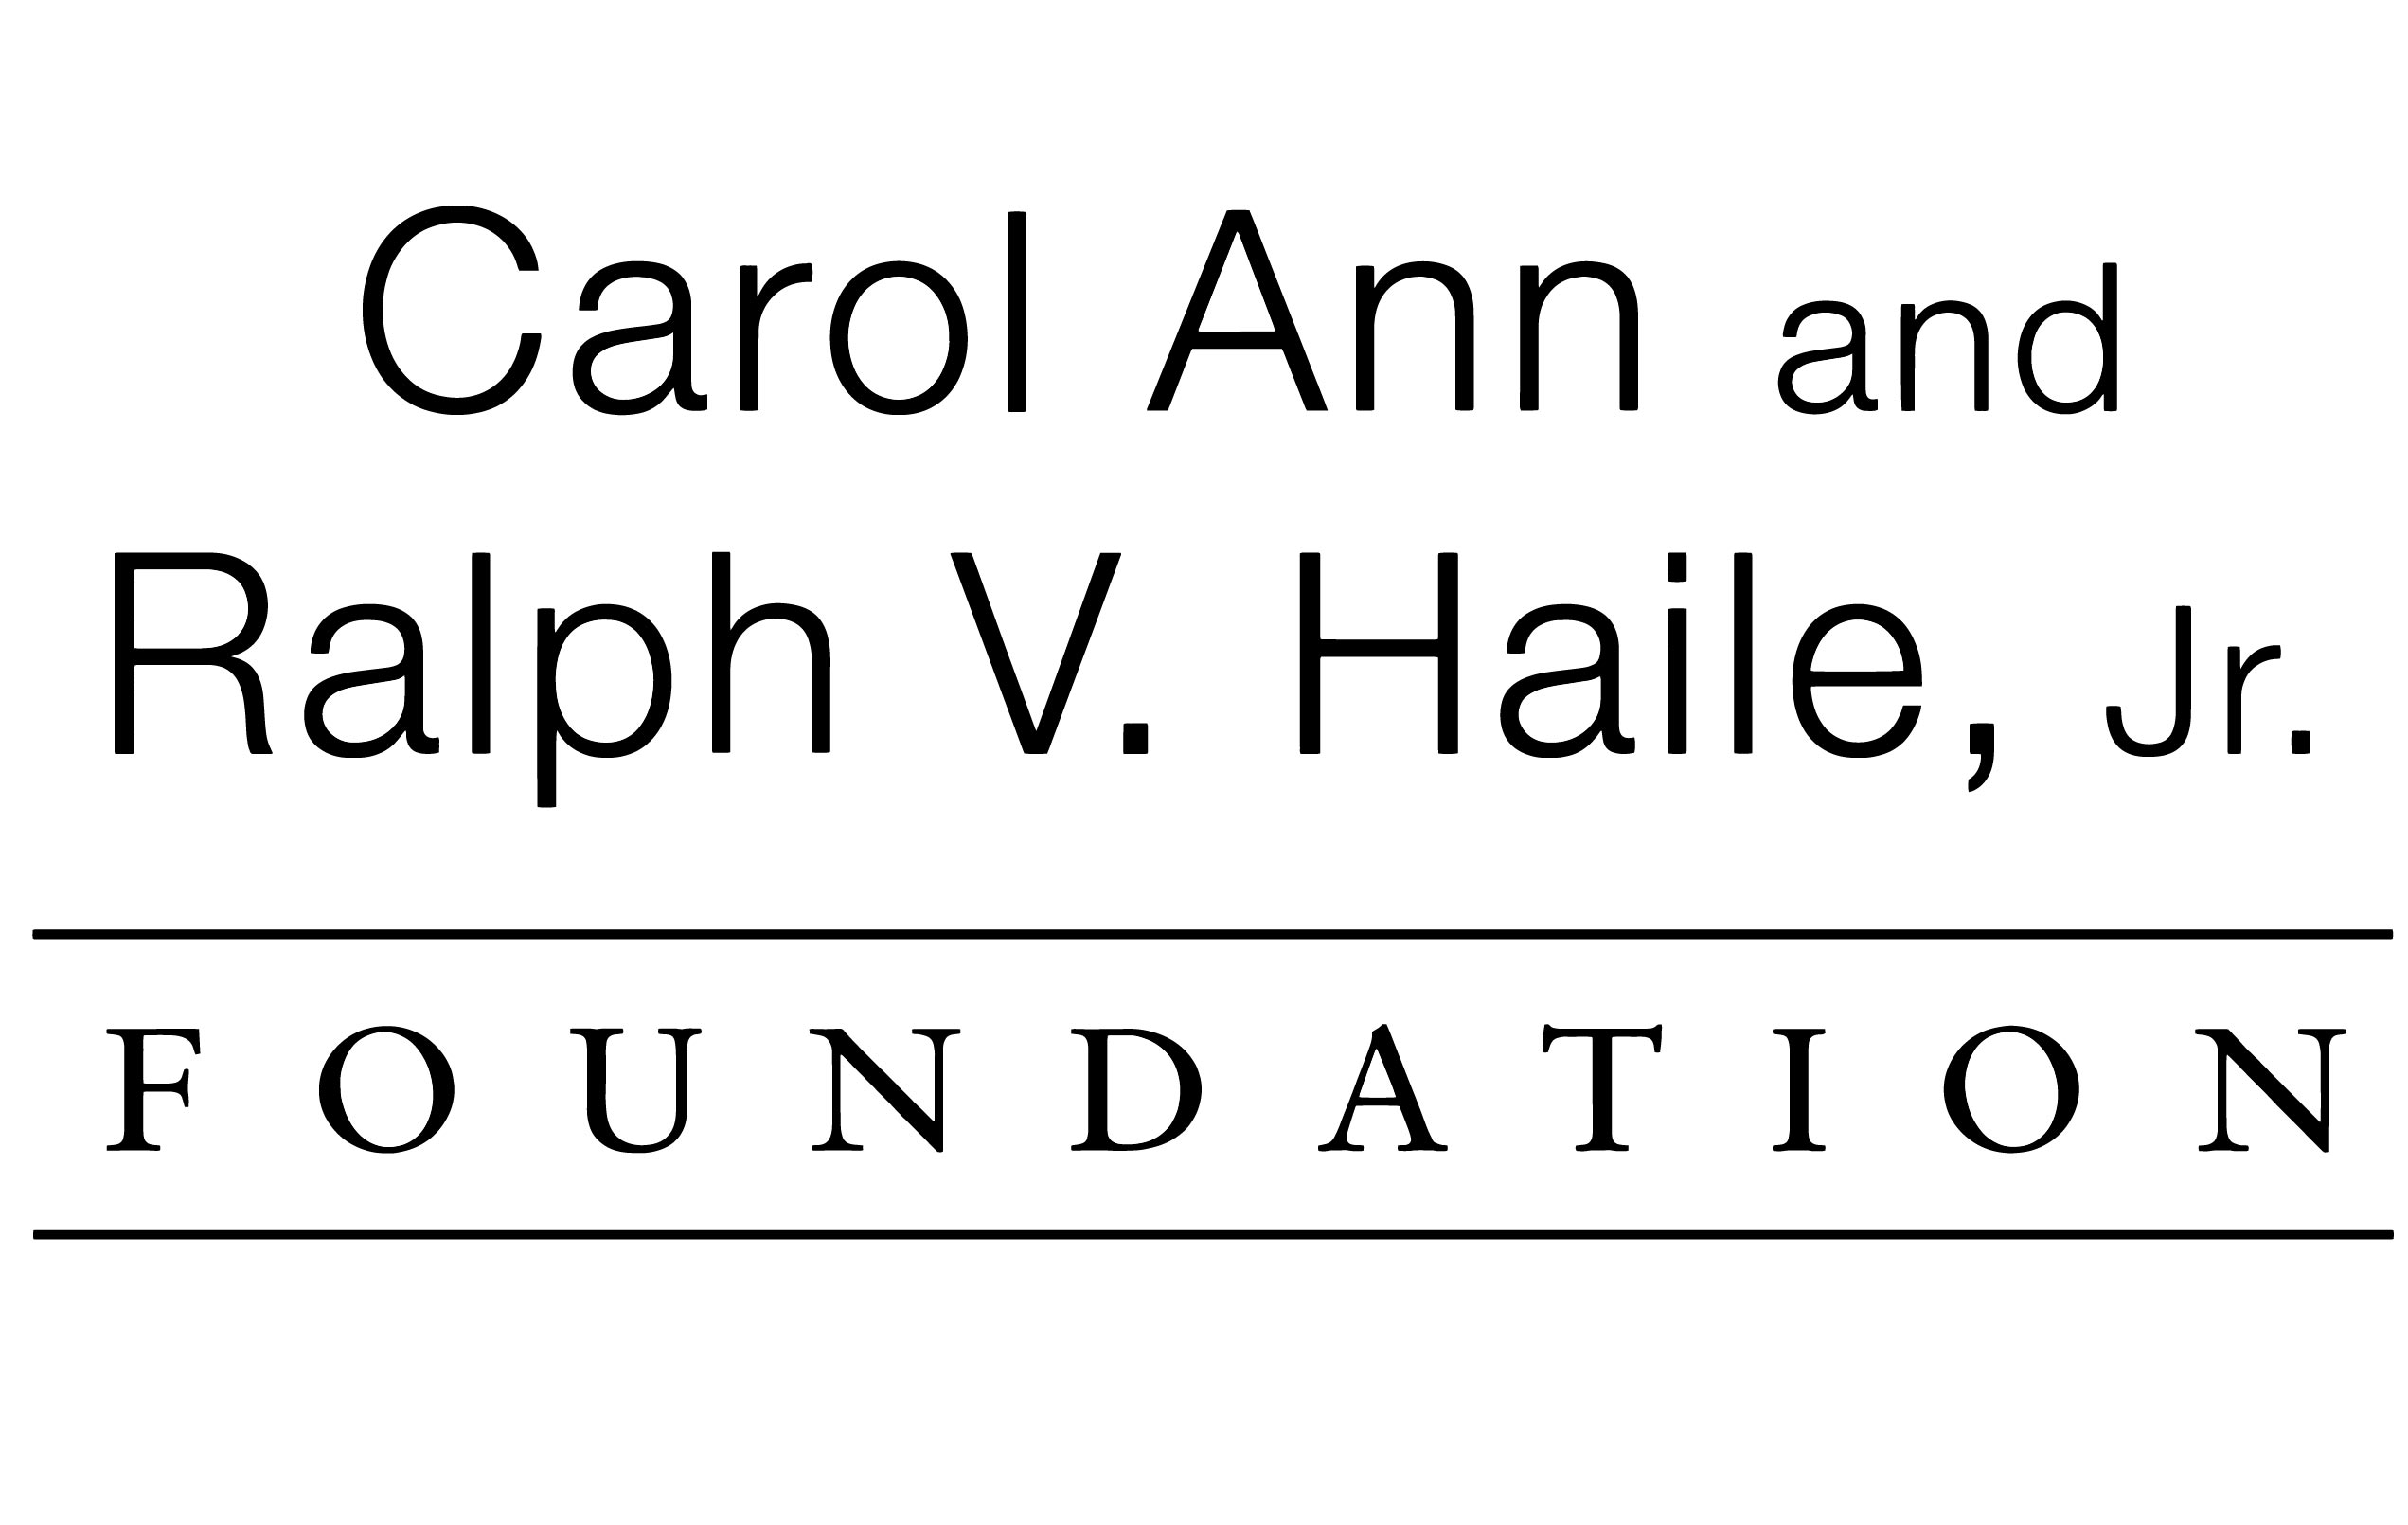 Haile Foundation